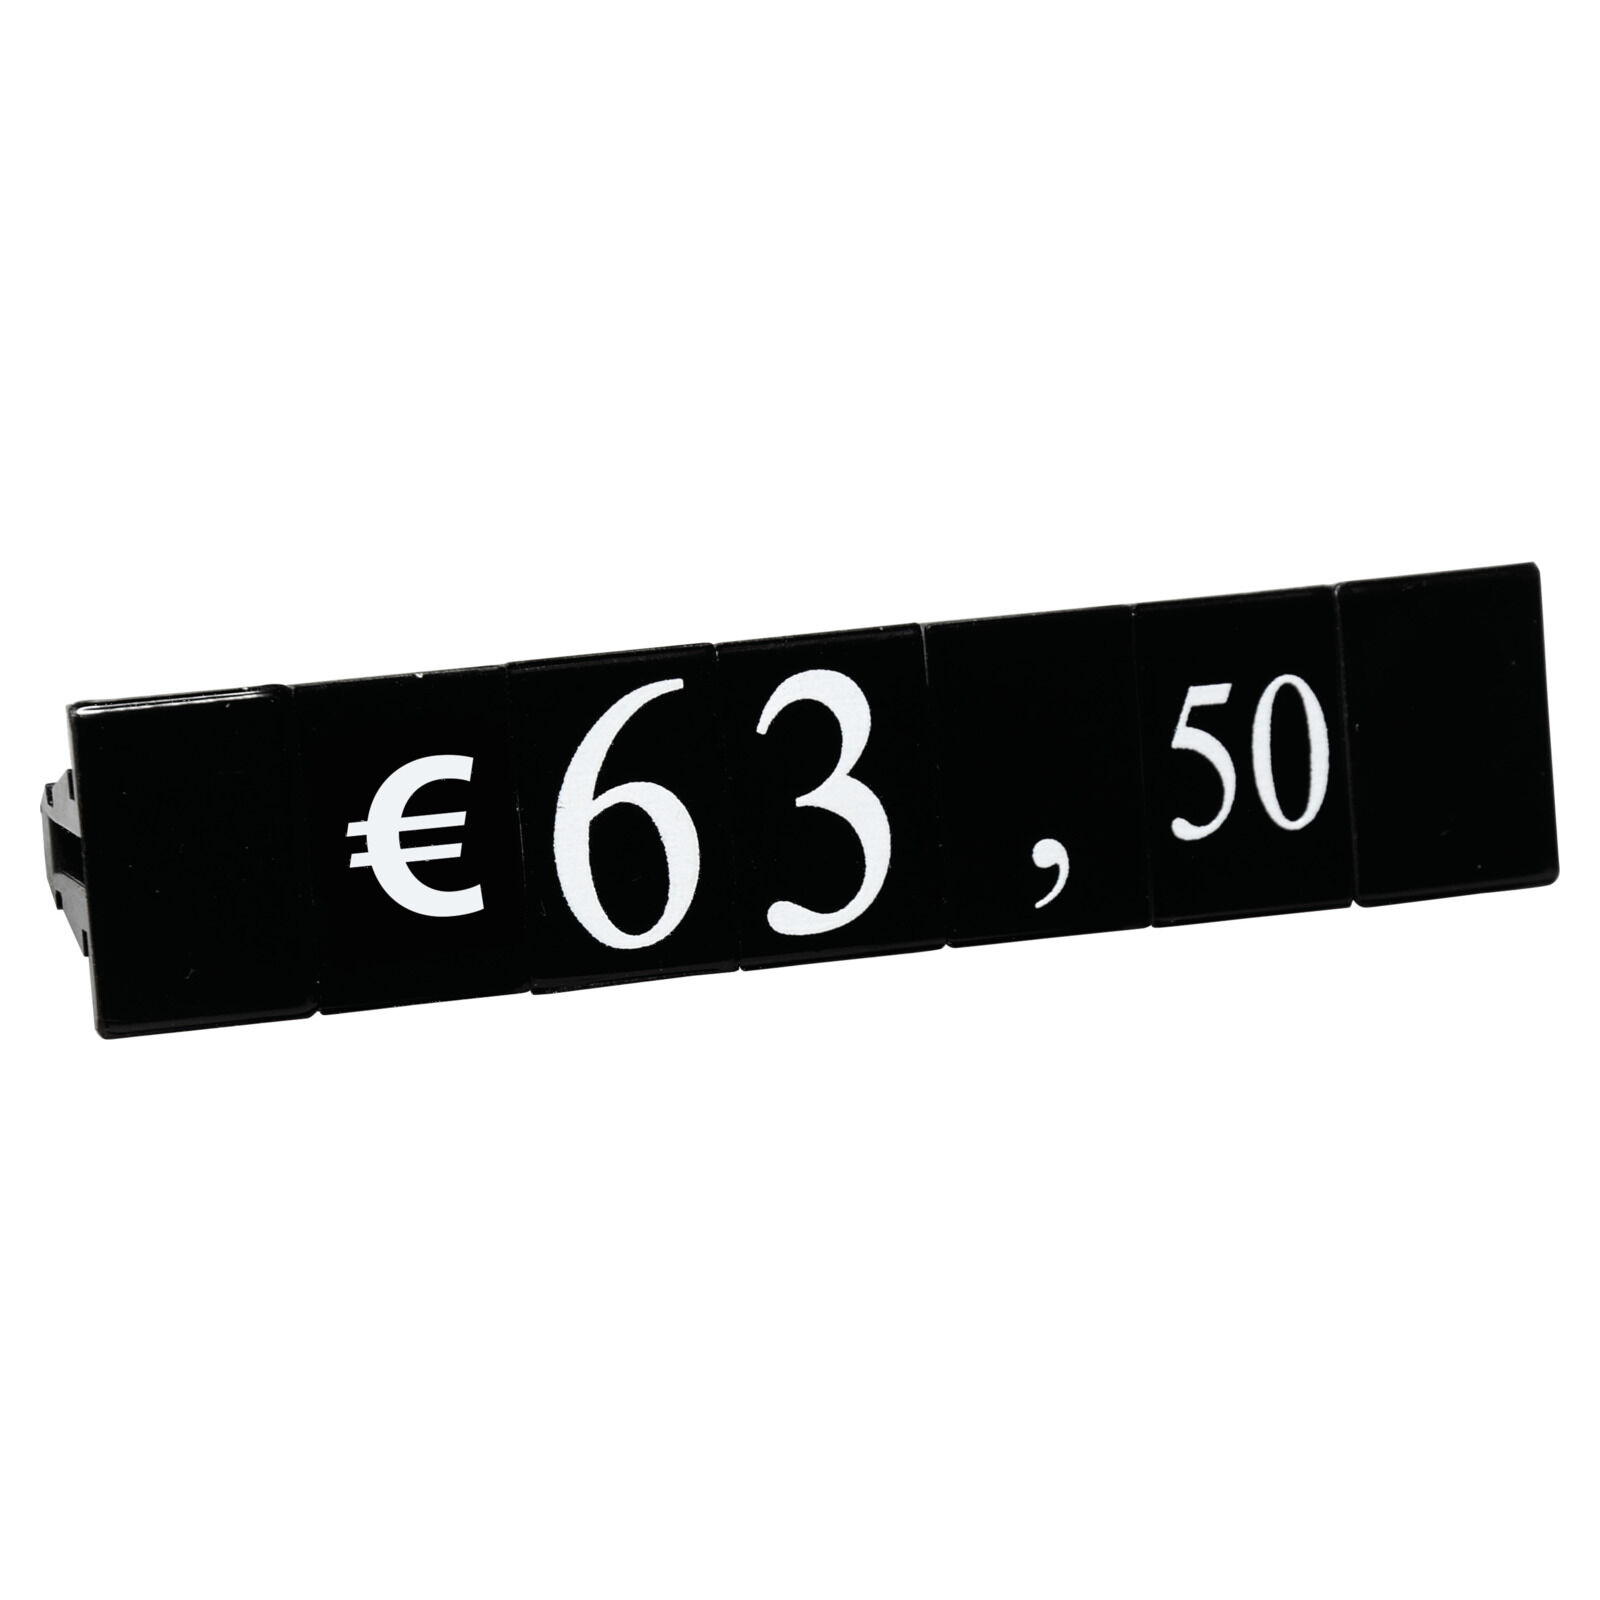 Preisschildkassette Zrich 15 mm, Schwarz